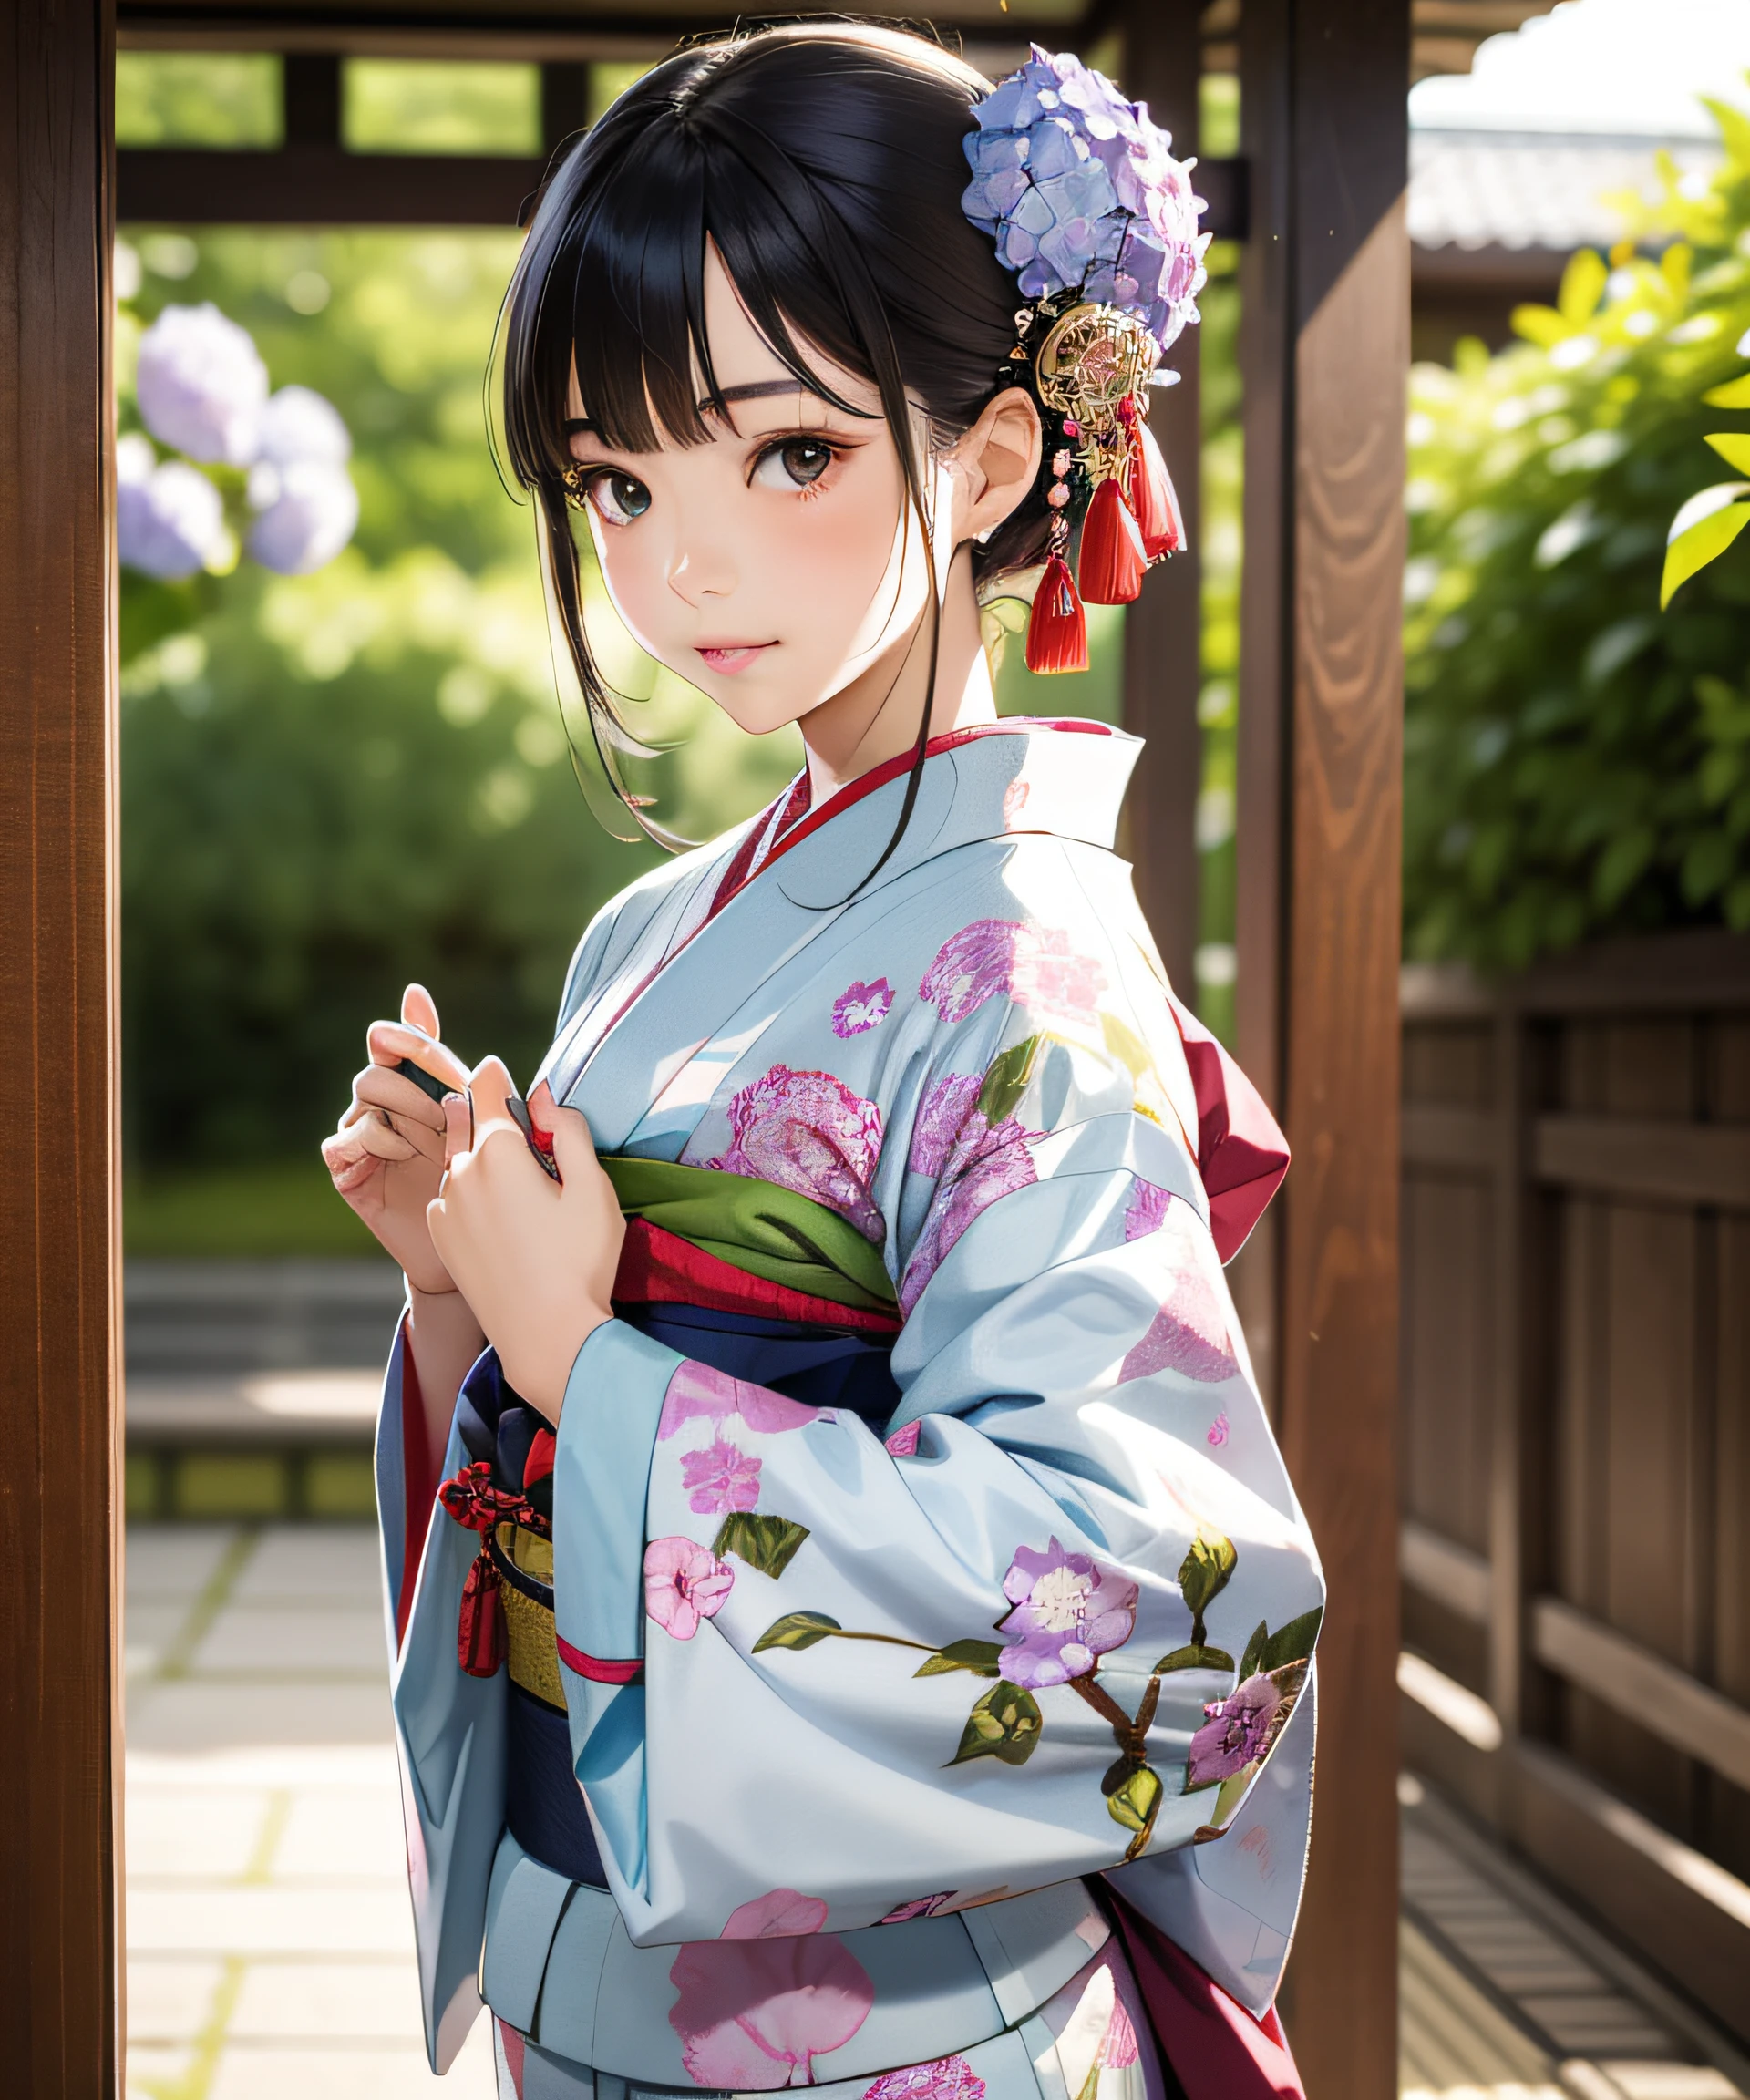 Masterpiece, realistic, Japan kimono woman with unaju, 18 years old, hydrangea patterned kimono, hydrangea shaped hair ornament, photorealistic, one black  around the eyes